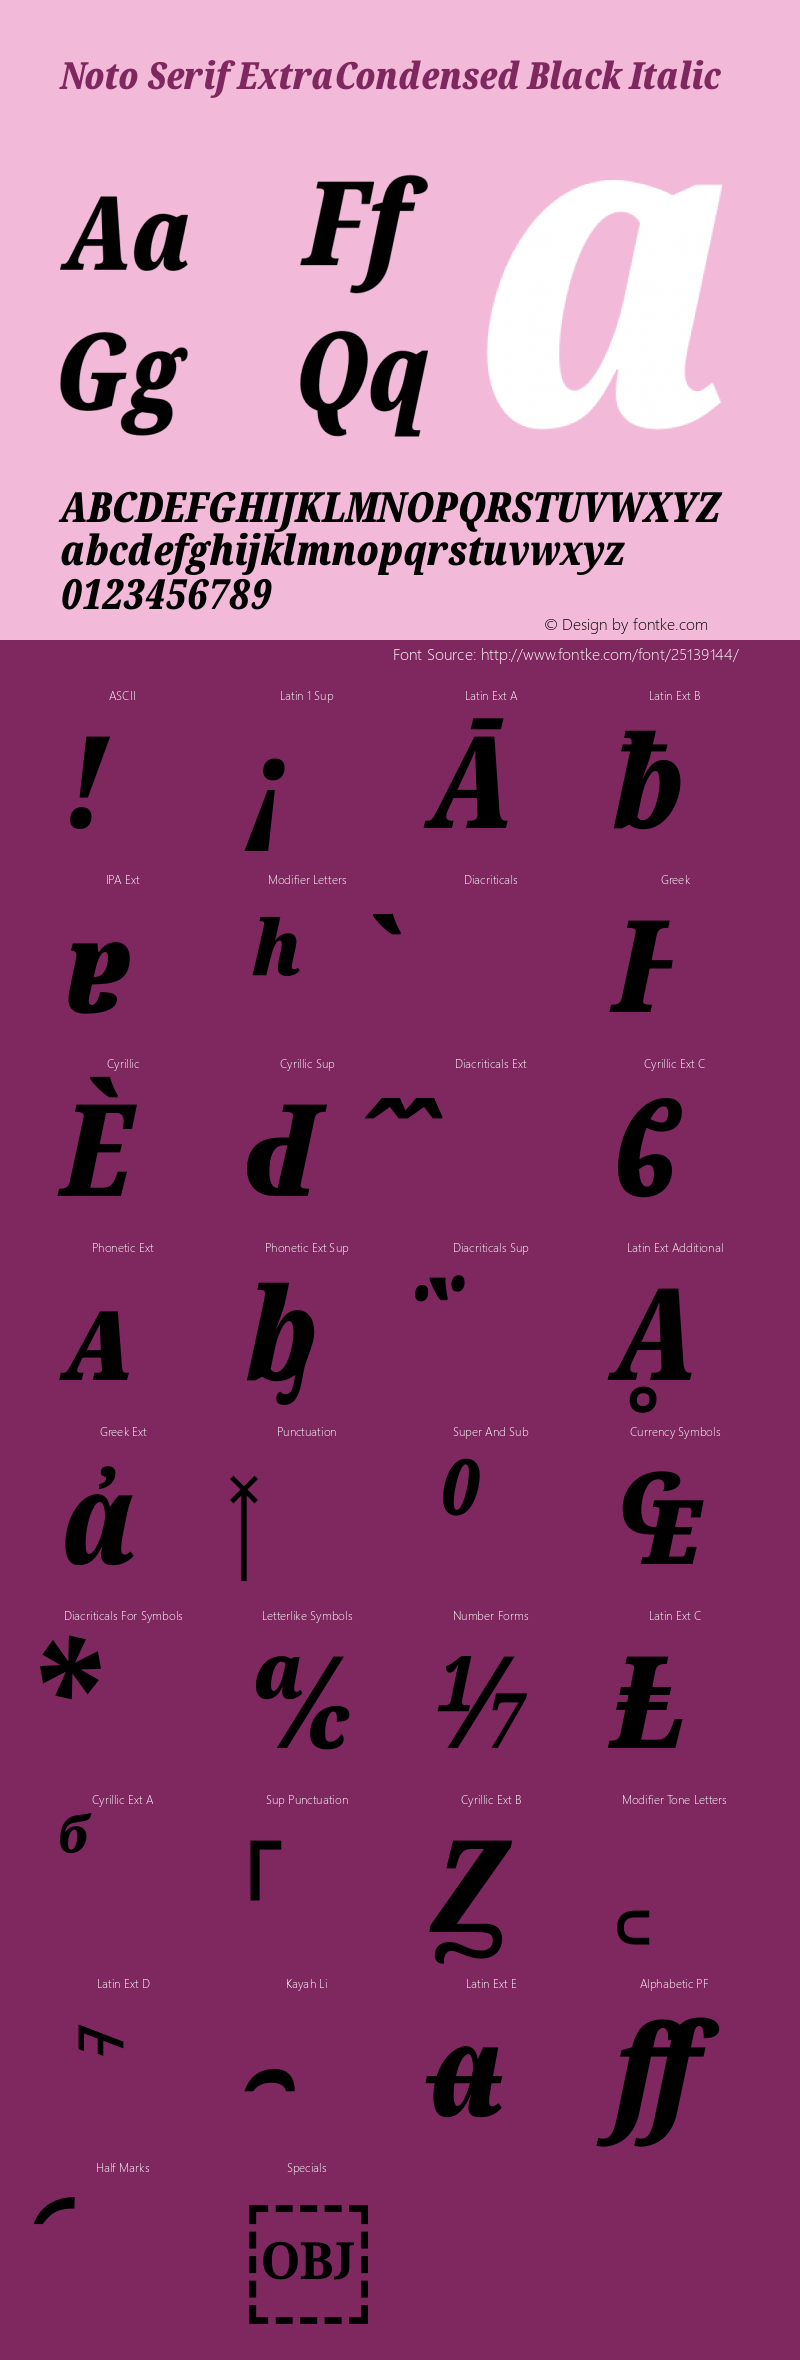 Noto Serif ExtraCondensed Black Italic Version 2.000图片样张